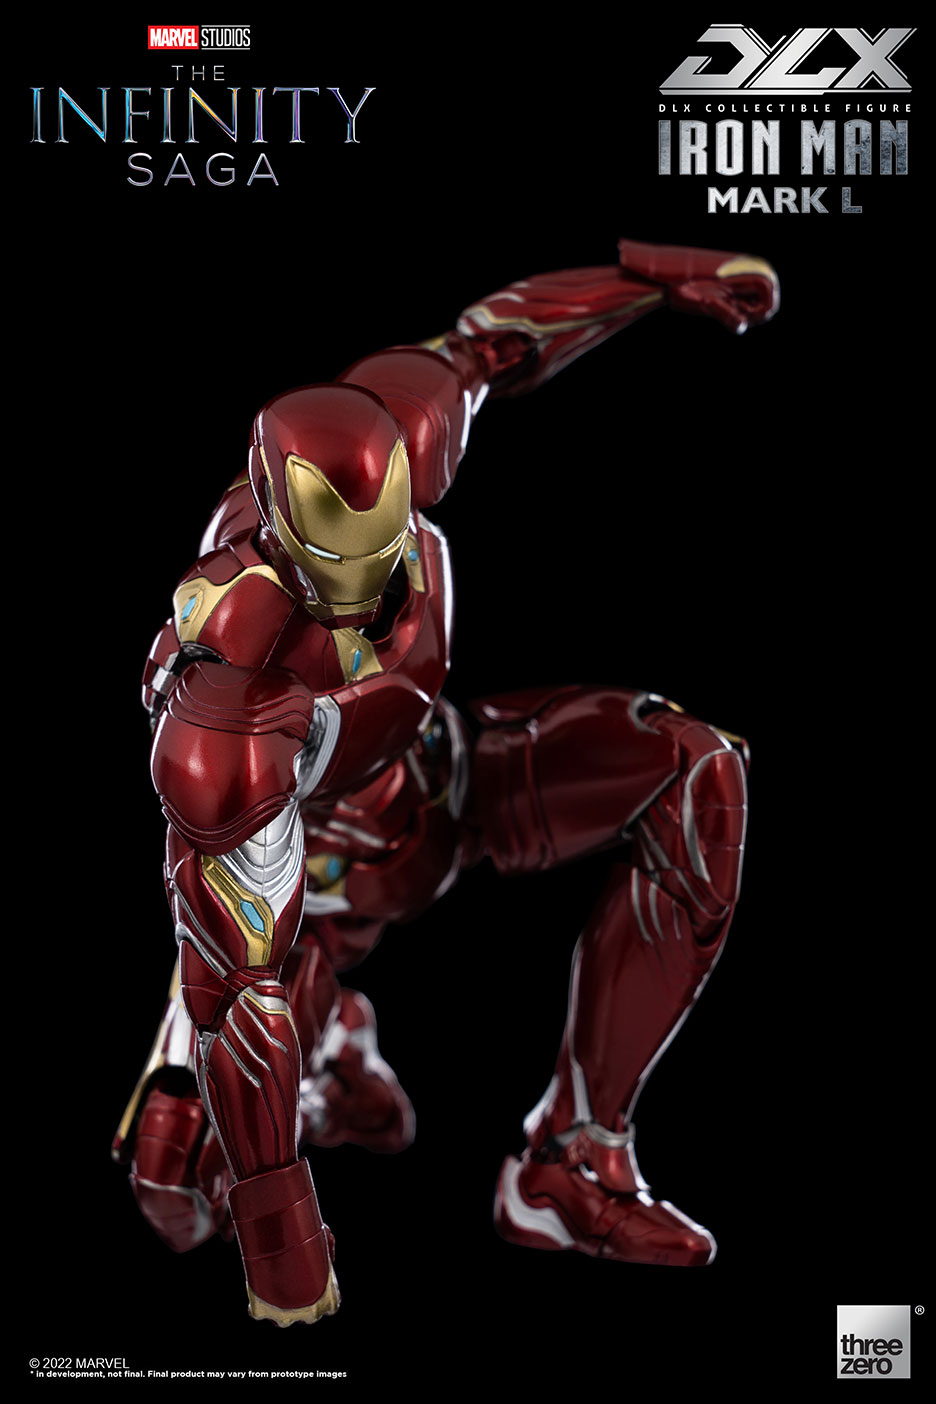 Toy Photography - Iron Man by DAlex-Artz on DeviantArt